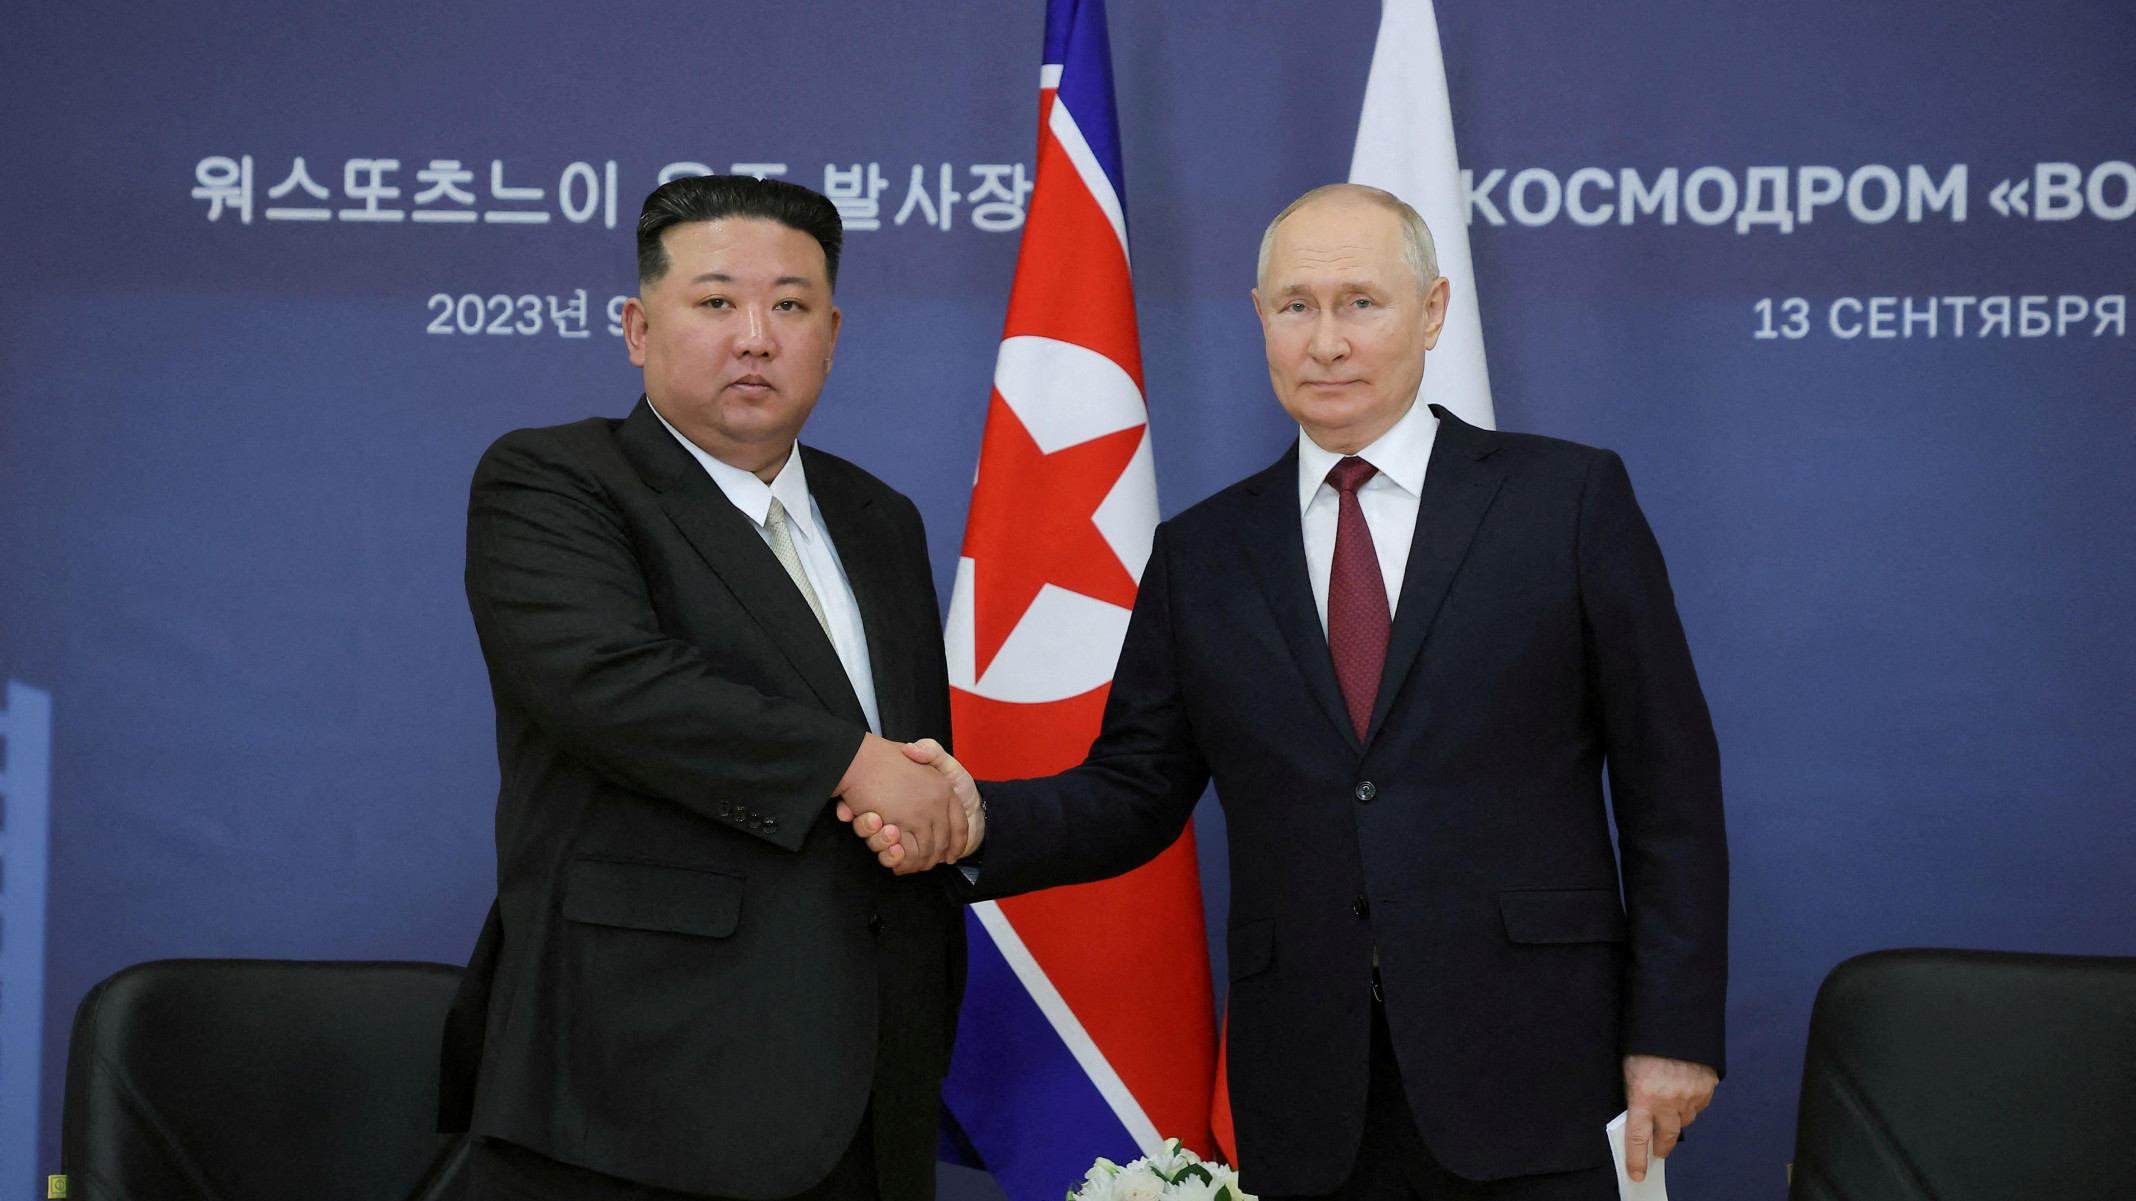 Por que aliança fortalecida entre Putin e Kim Jong Un preocupa tanto os EUA